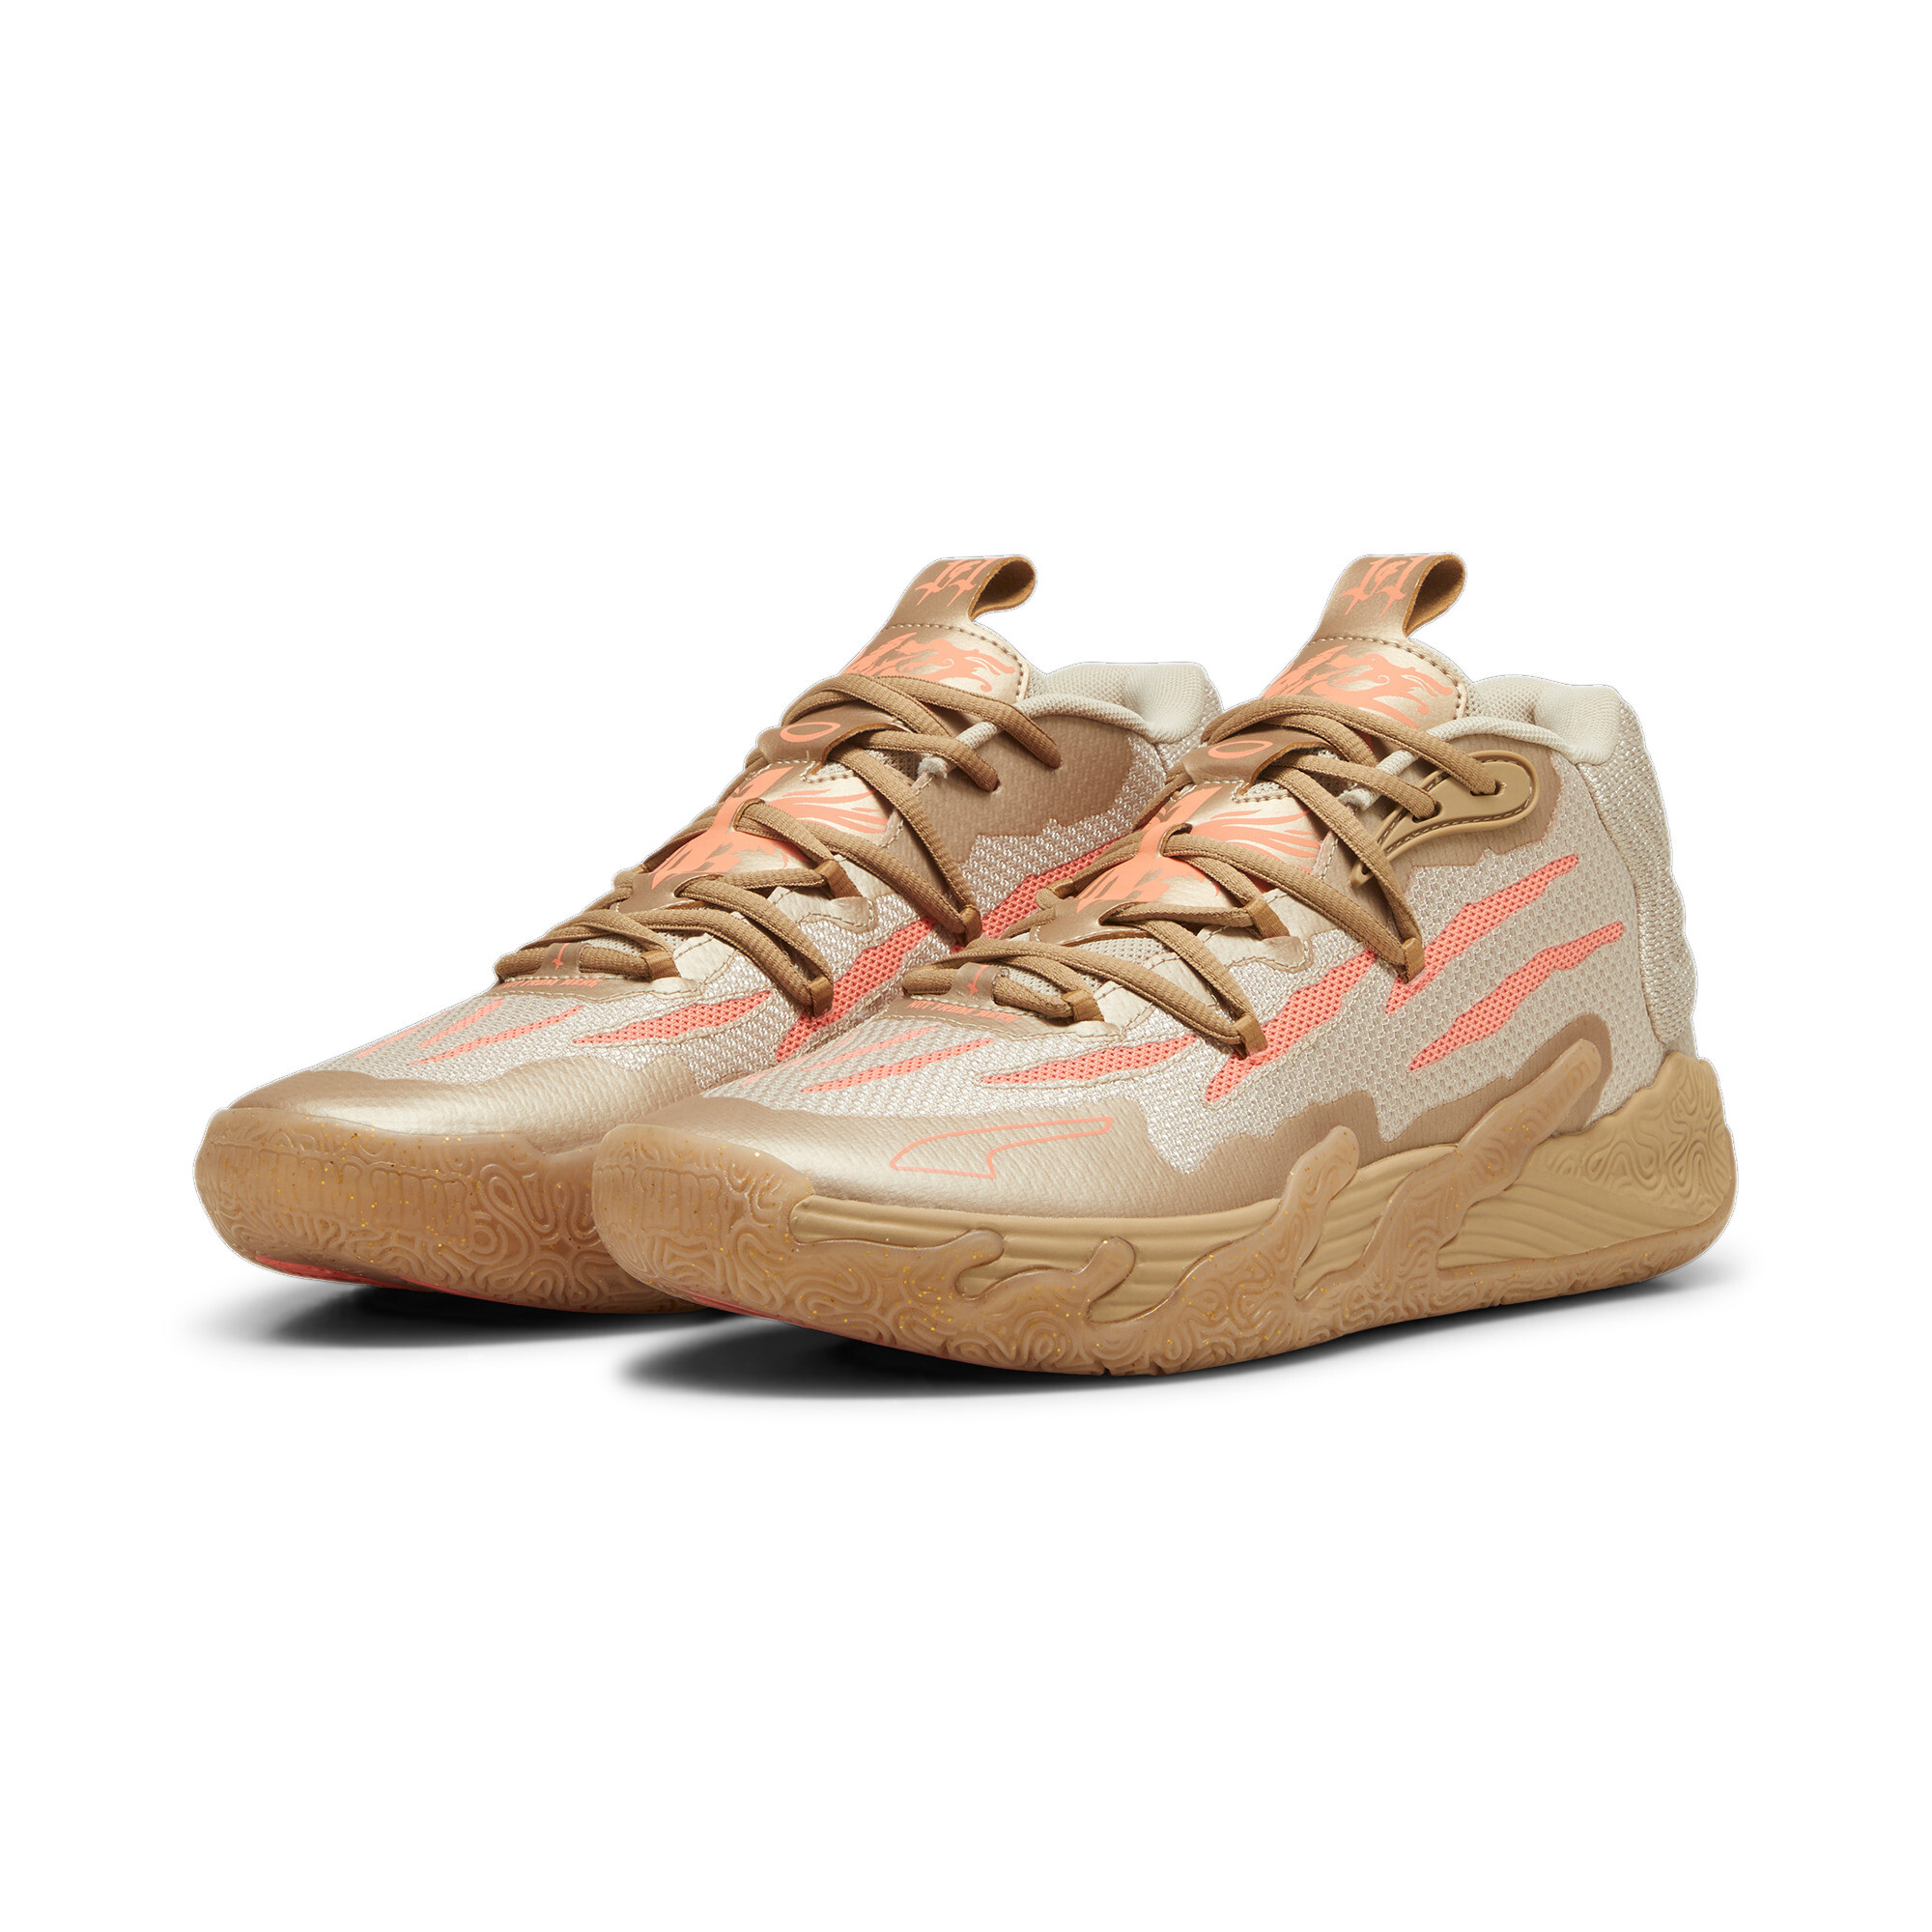 Puma MB.03 CNY Basketball Shoes, Gold, Size 53.5, Shoes